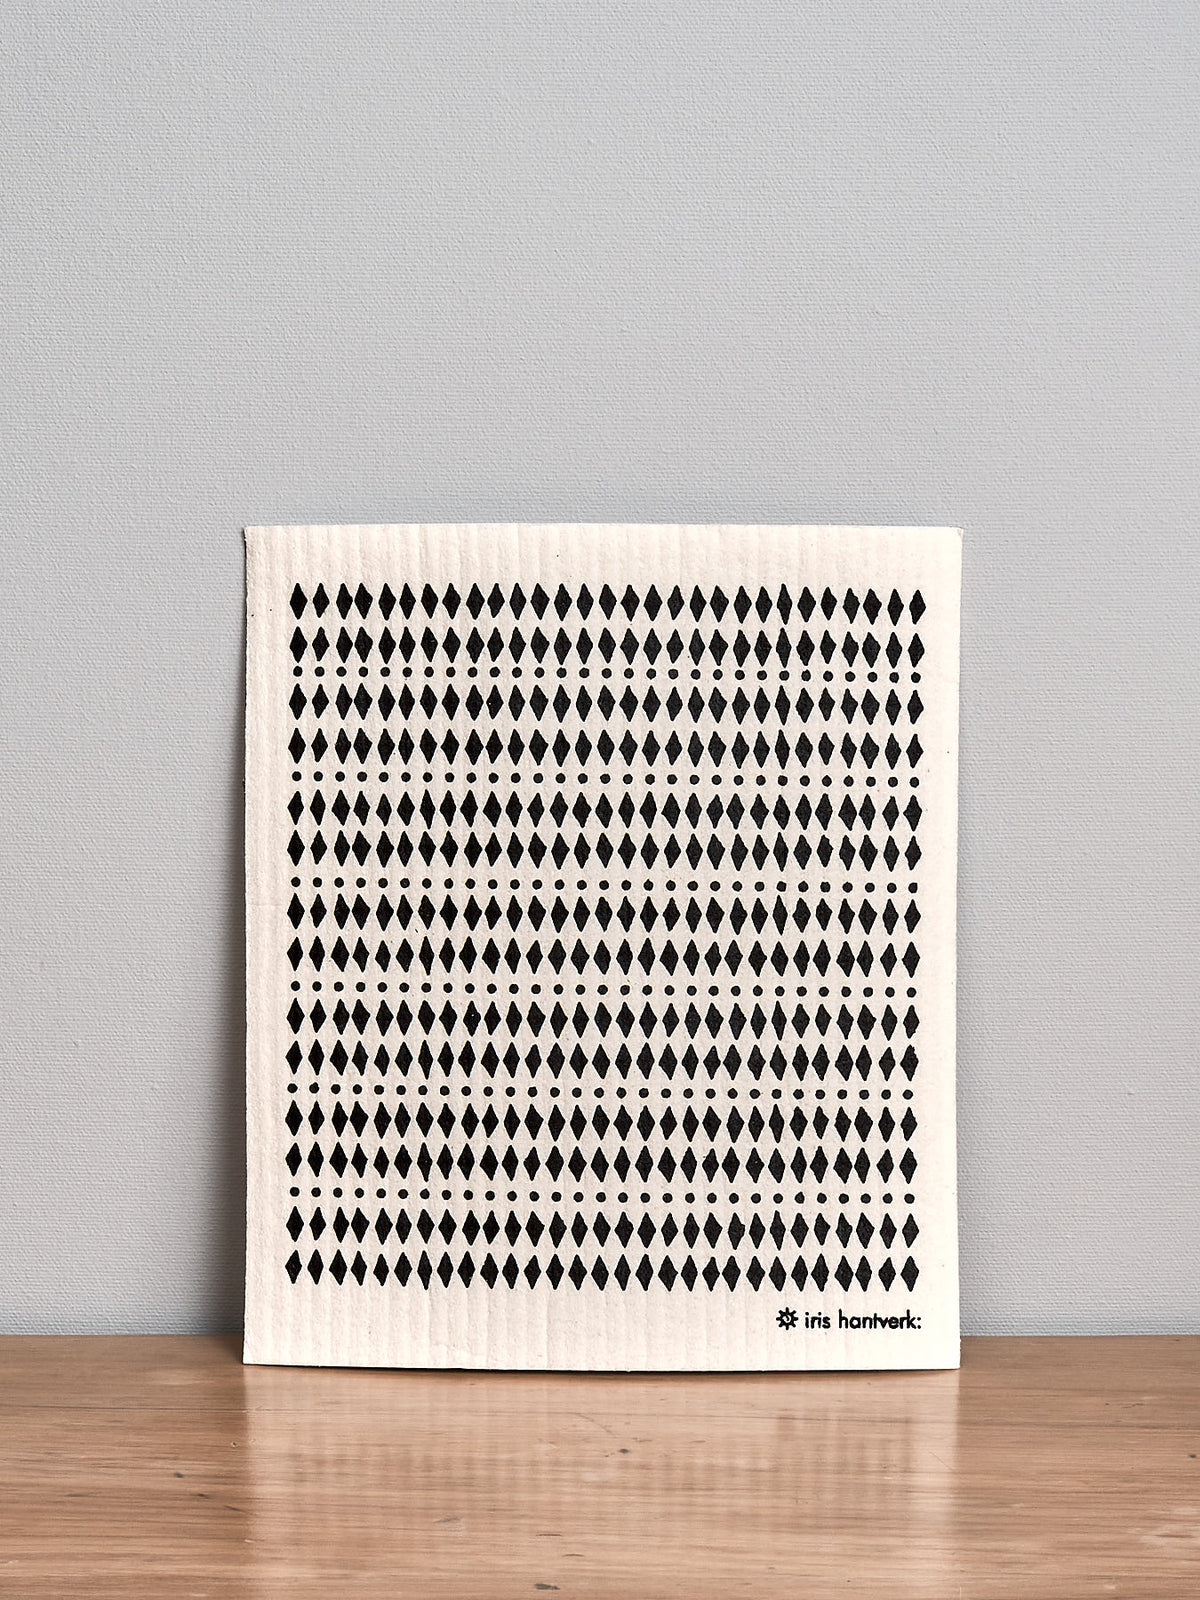 A black and white Household Cloth – Mini Diamond with dots on it, by Iris Hantverk.